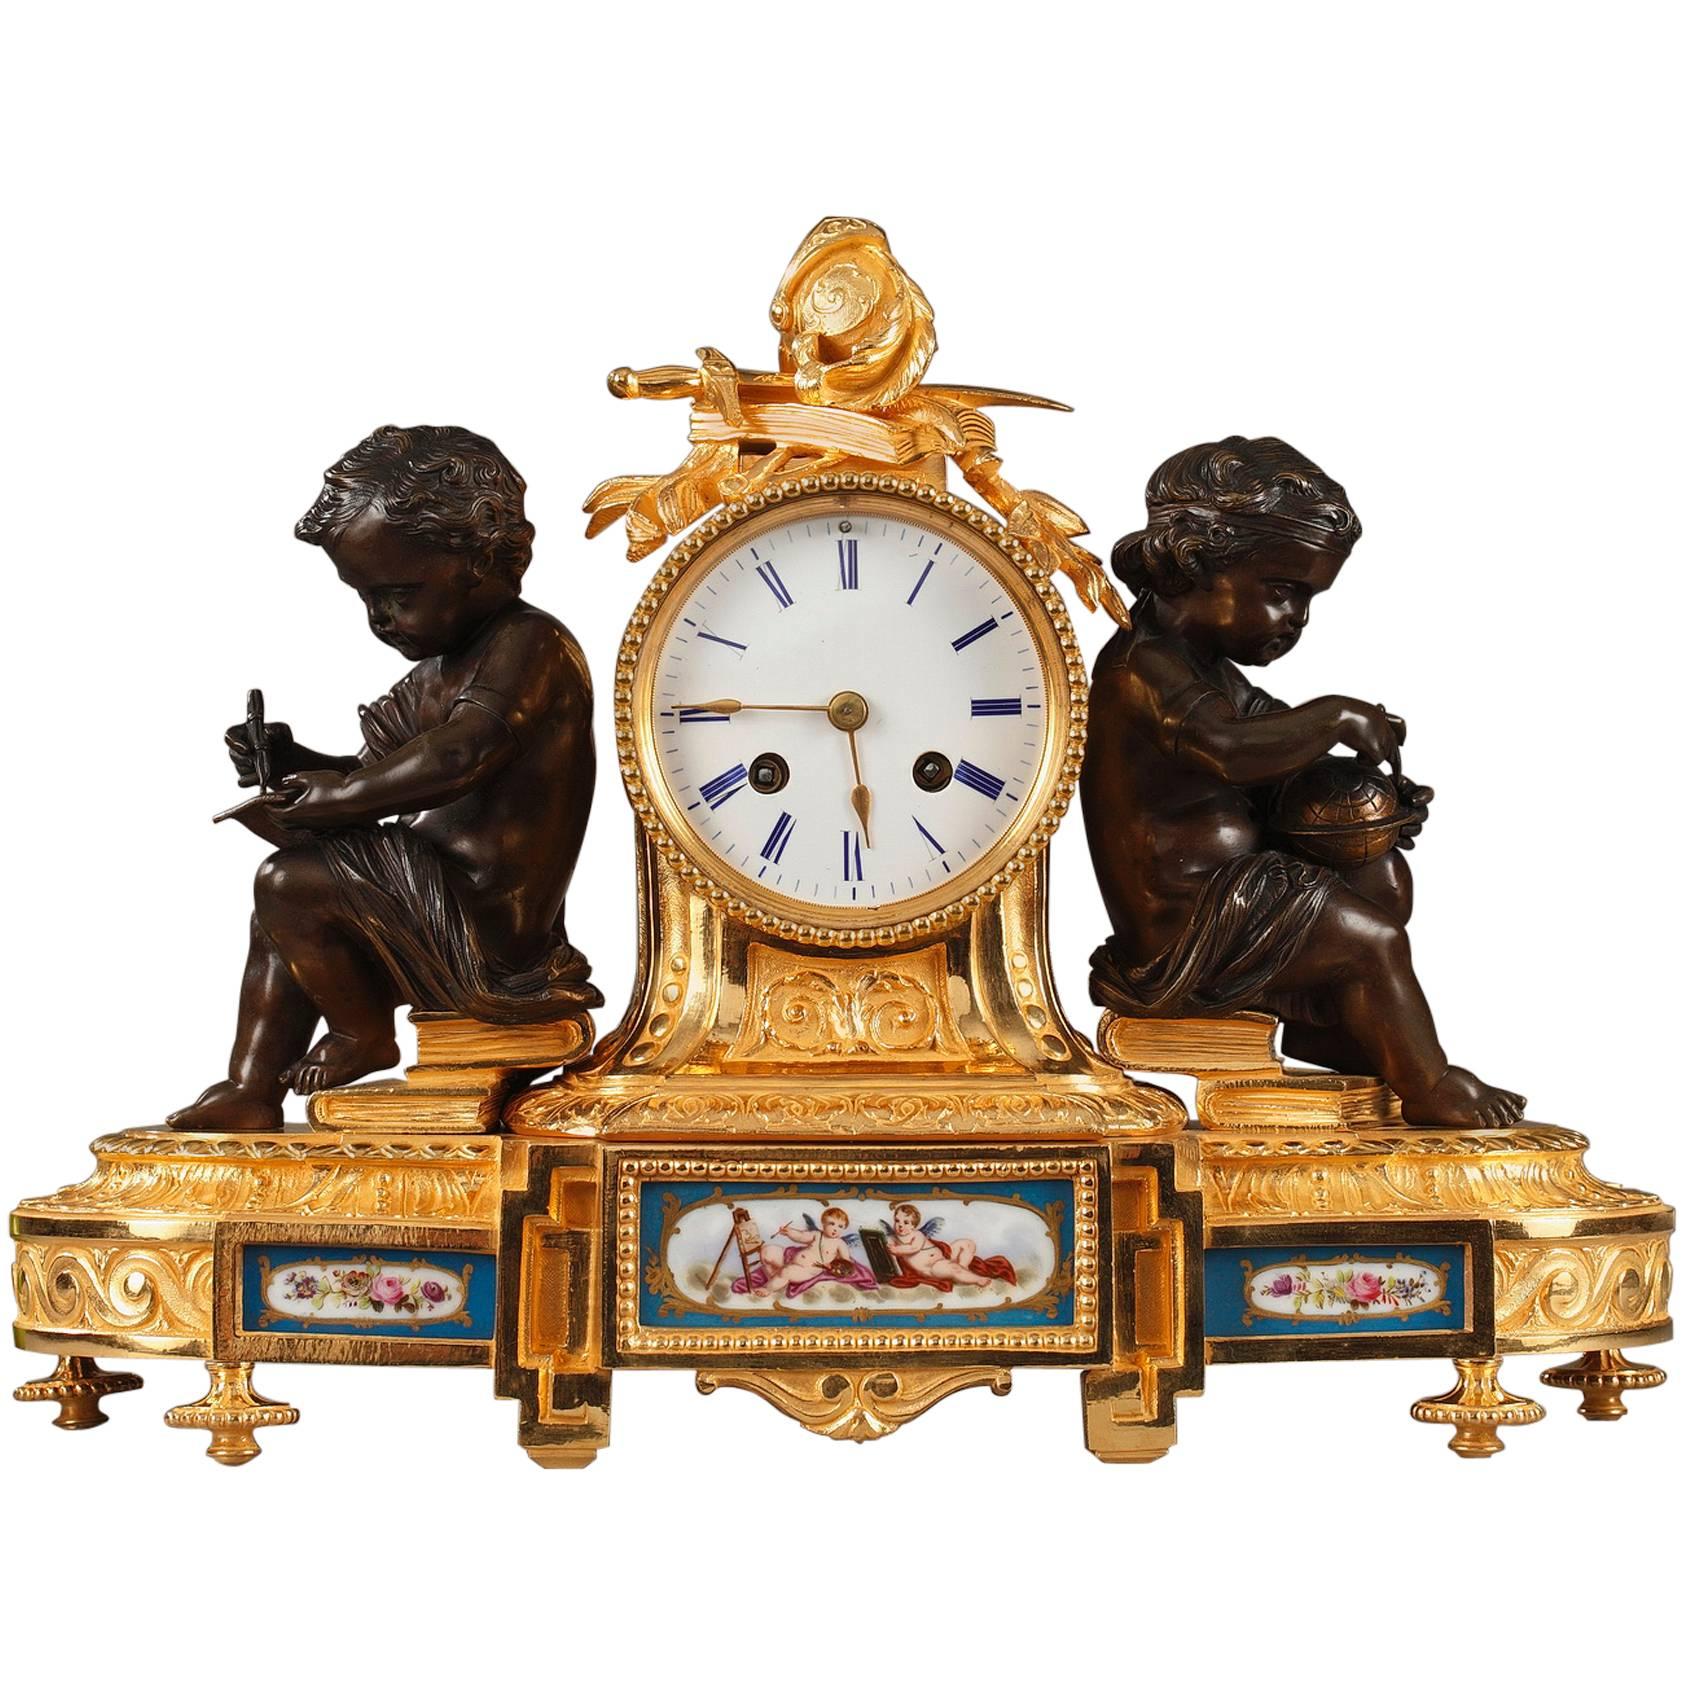 Napoleon III Bronze and Porcelain Mantel Clock in Louis XVI Style, 19th Century